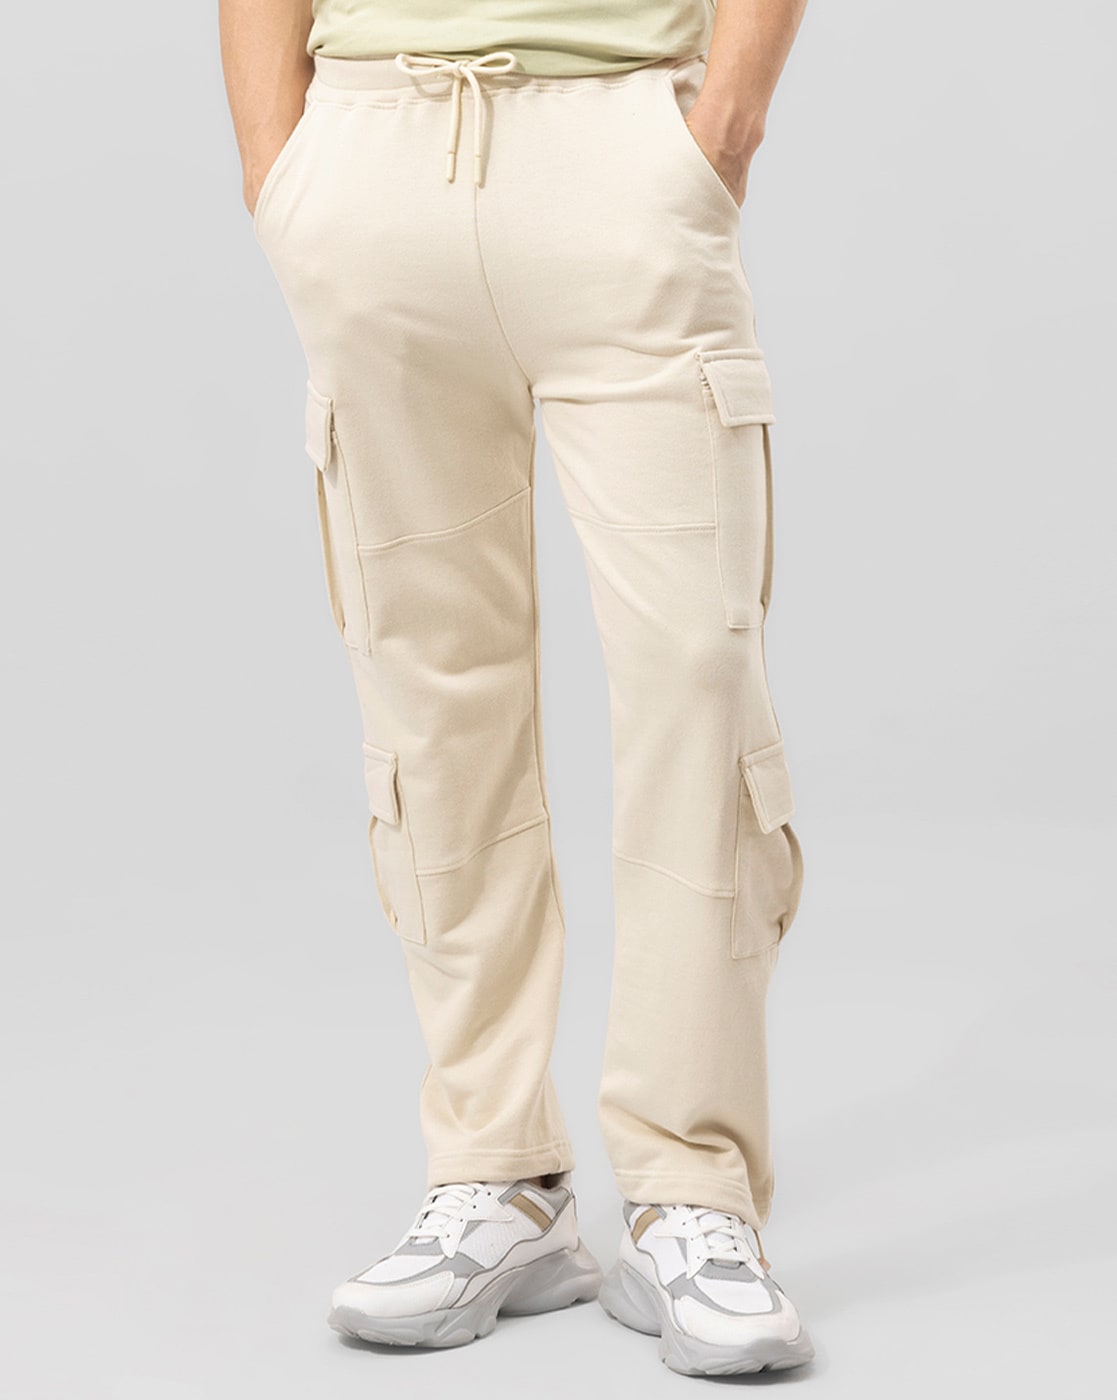 H&M Cream Wide Legged Trousers, 4 | Wide leg trouser, Cream wide leg  trousers, Trouser pants women